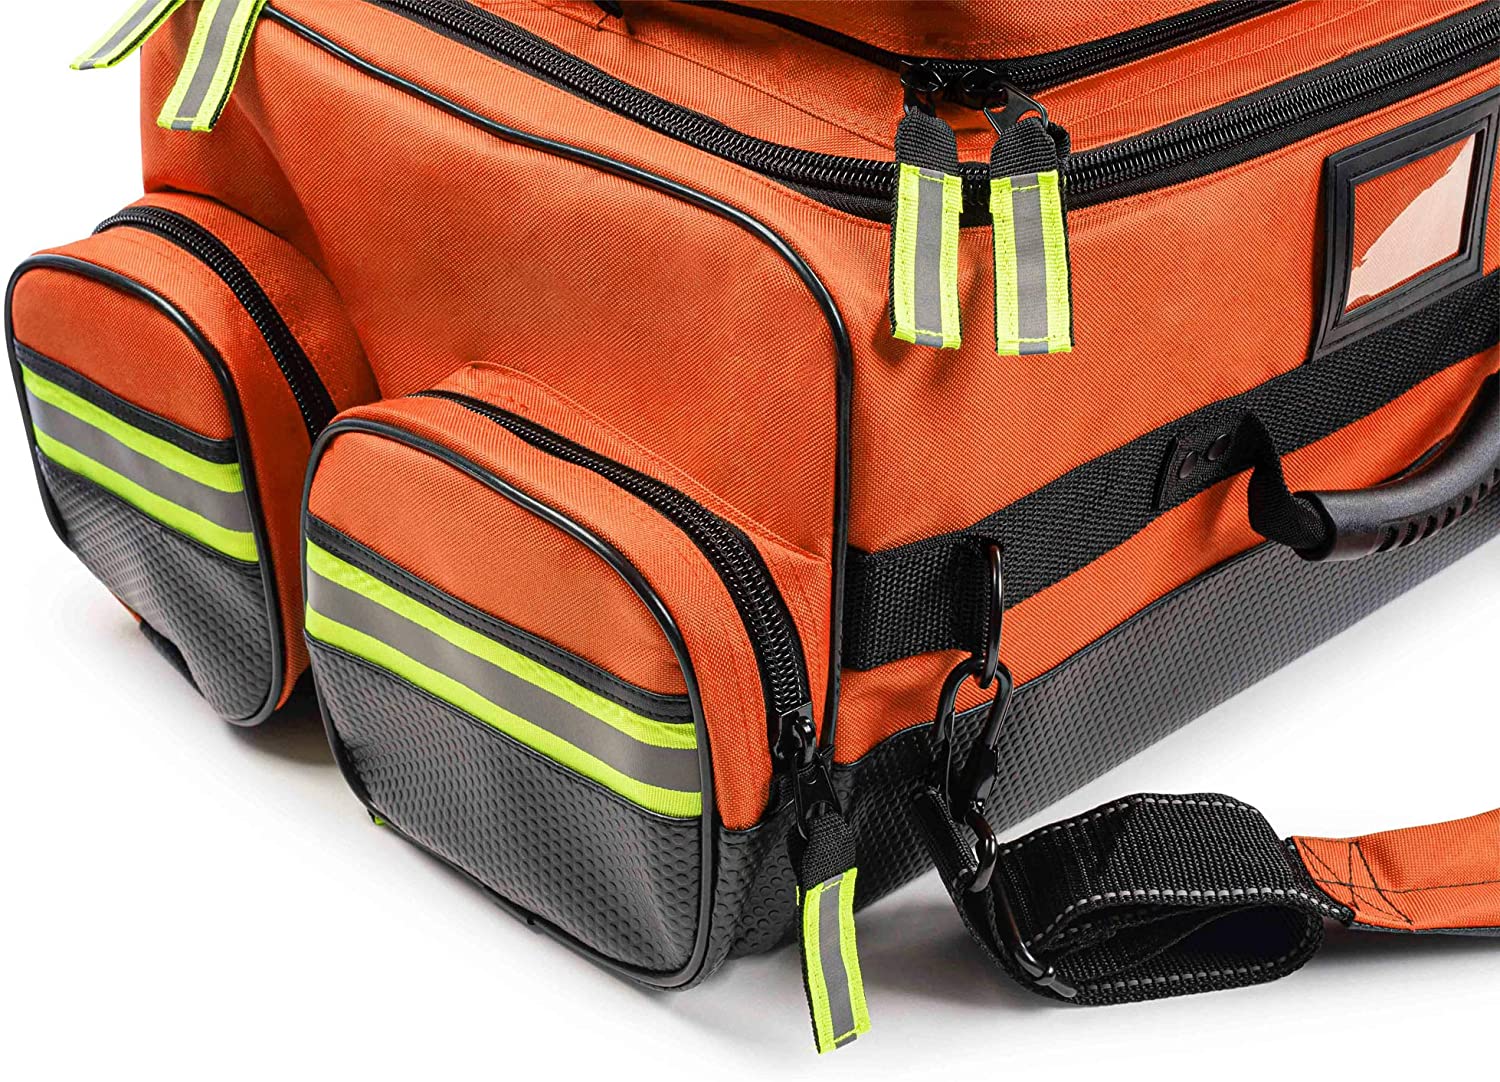 Scherber First Responder O2 Bag | Ultimate Professional EMT/EMS Trauma Oxygen Bag